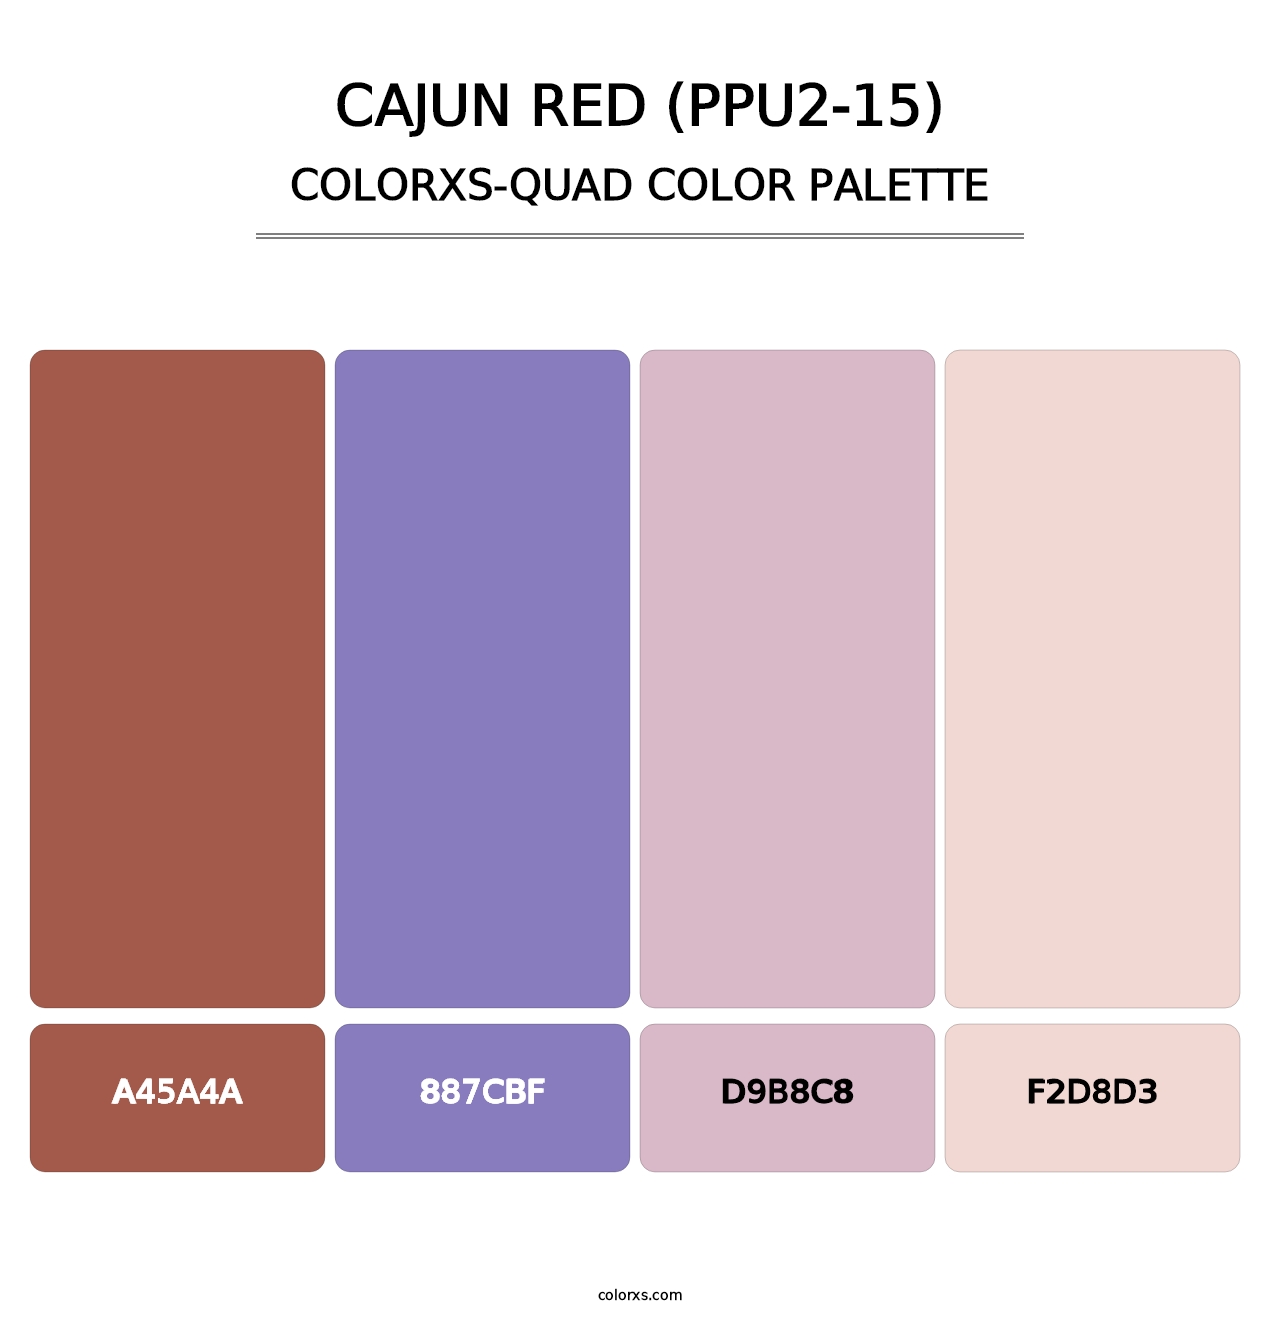 Cajun Red (PPU2-15) - Colorxs Quad Palette